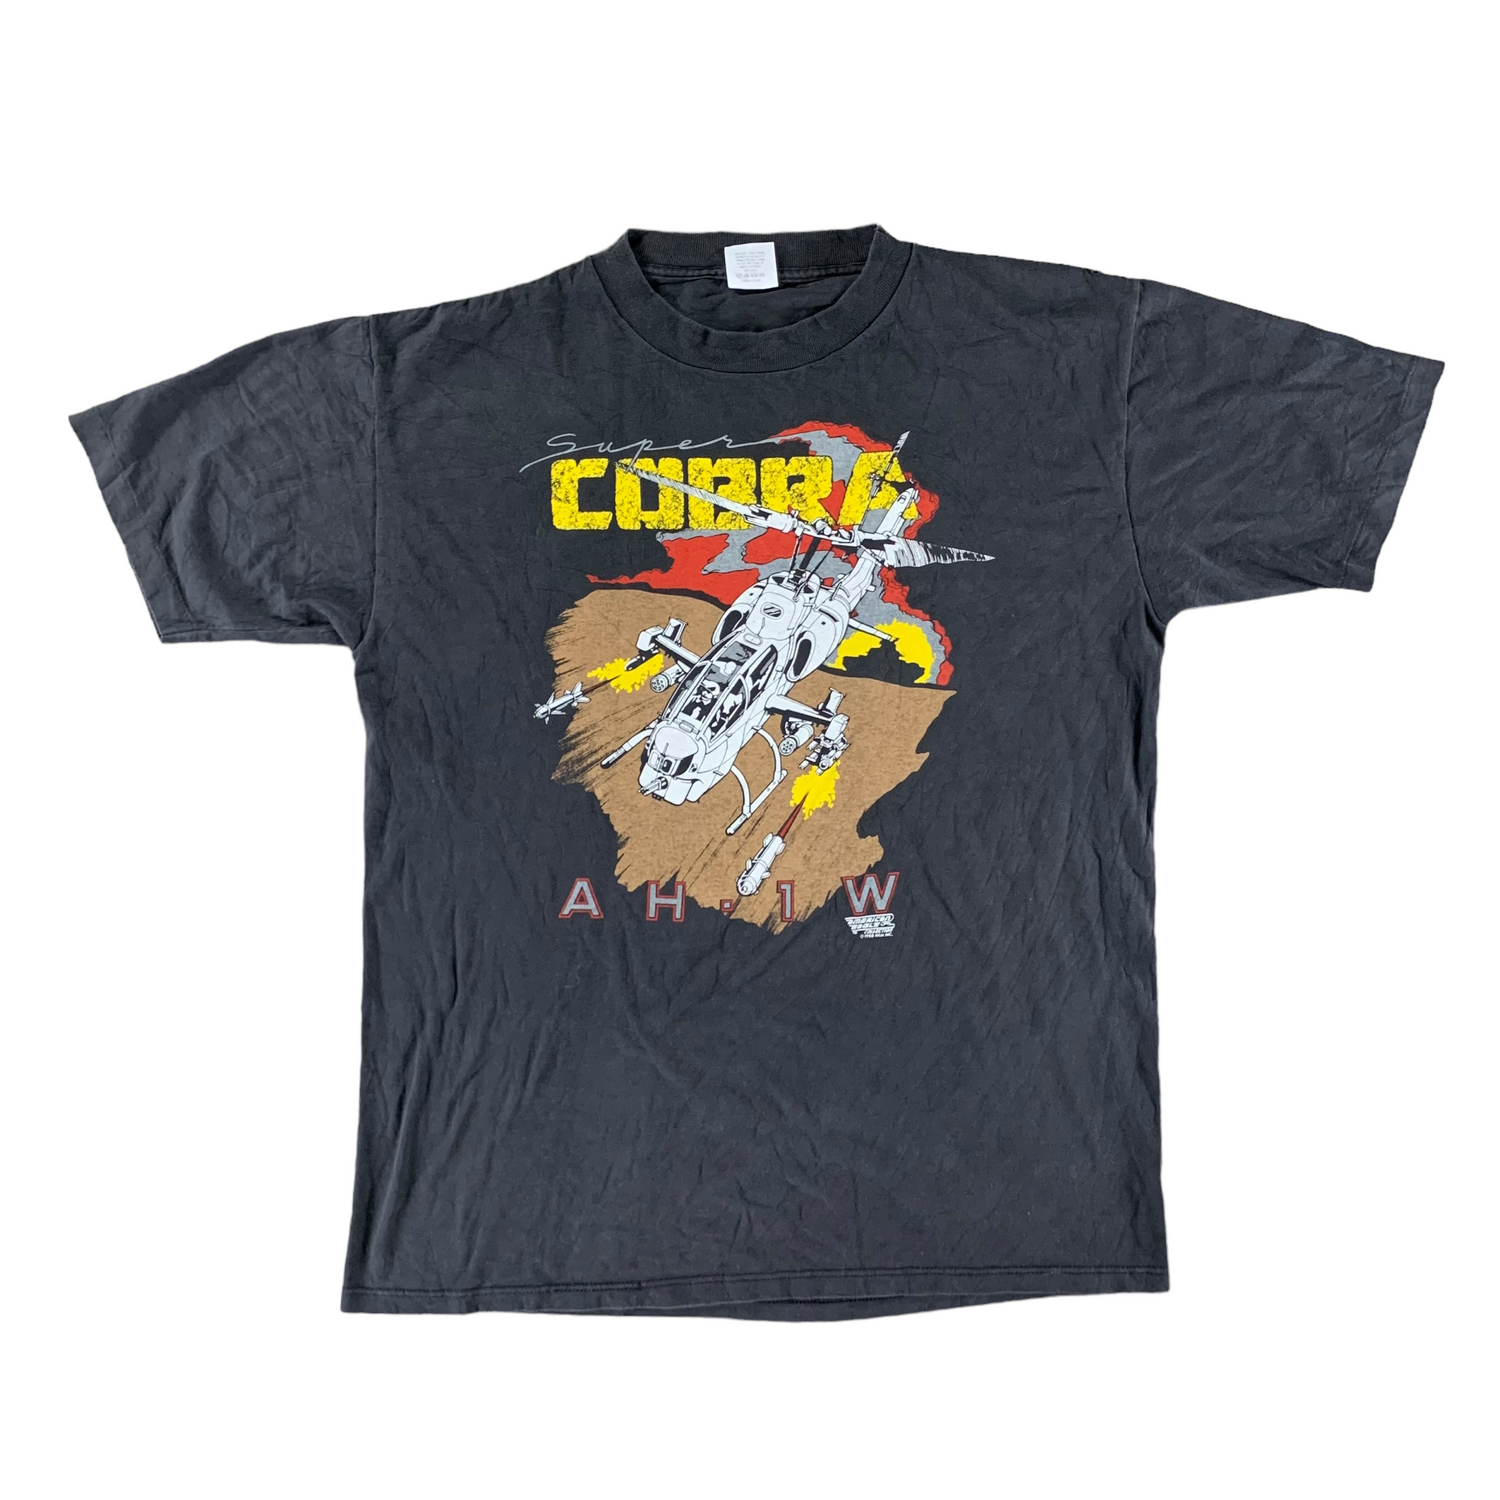 Vintage 1988 Super Cobra T-shirt size XL